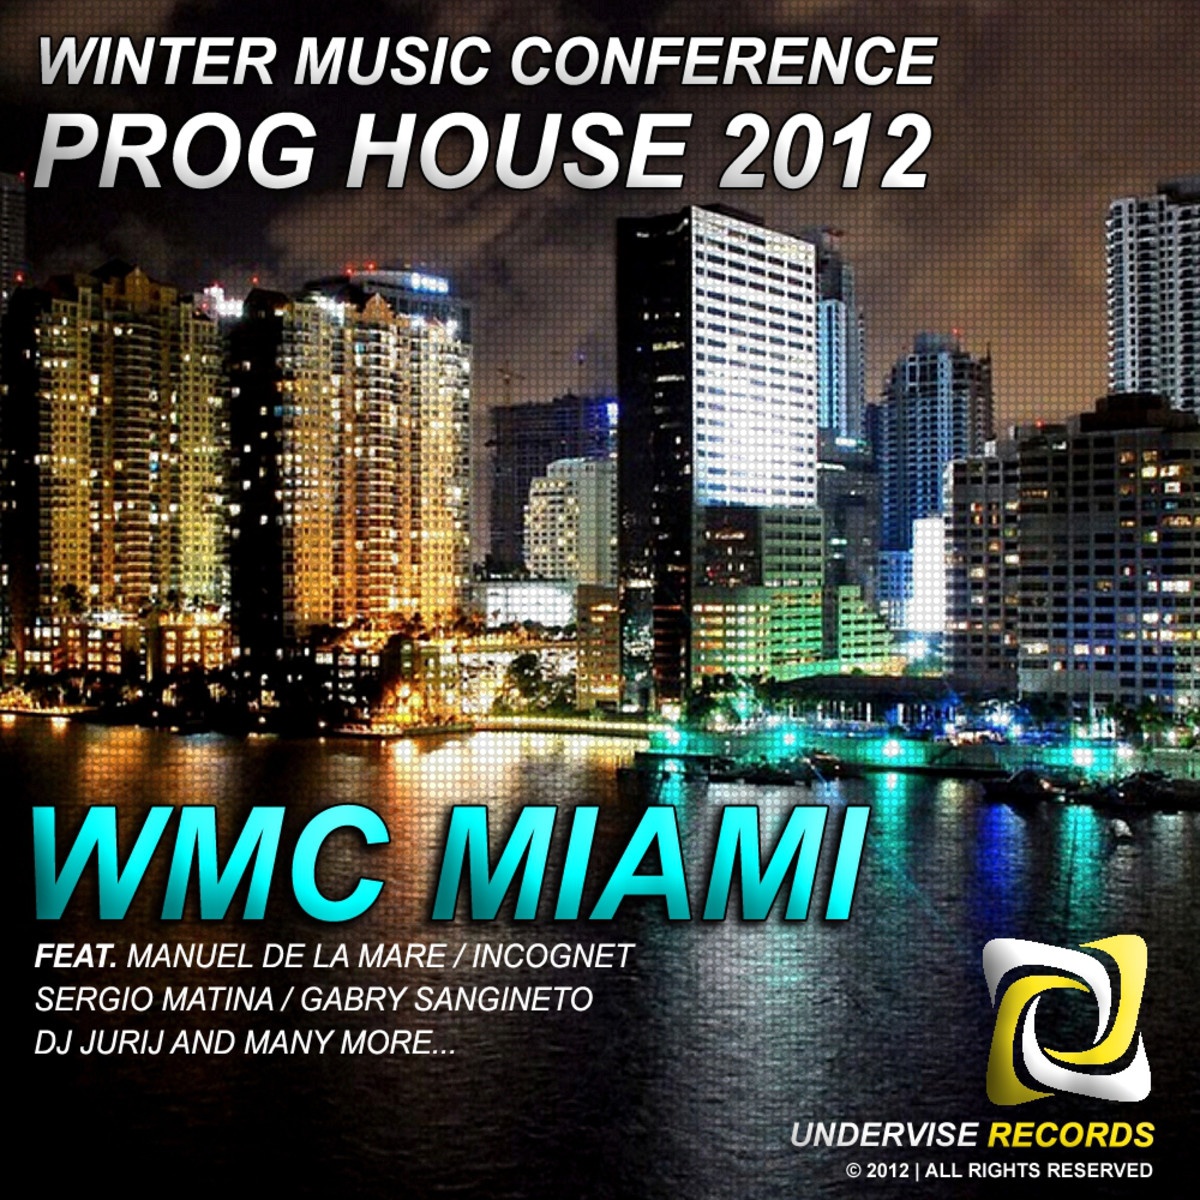 Winter Music Conference - Prog House 2012 - WMC Miami